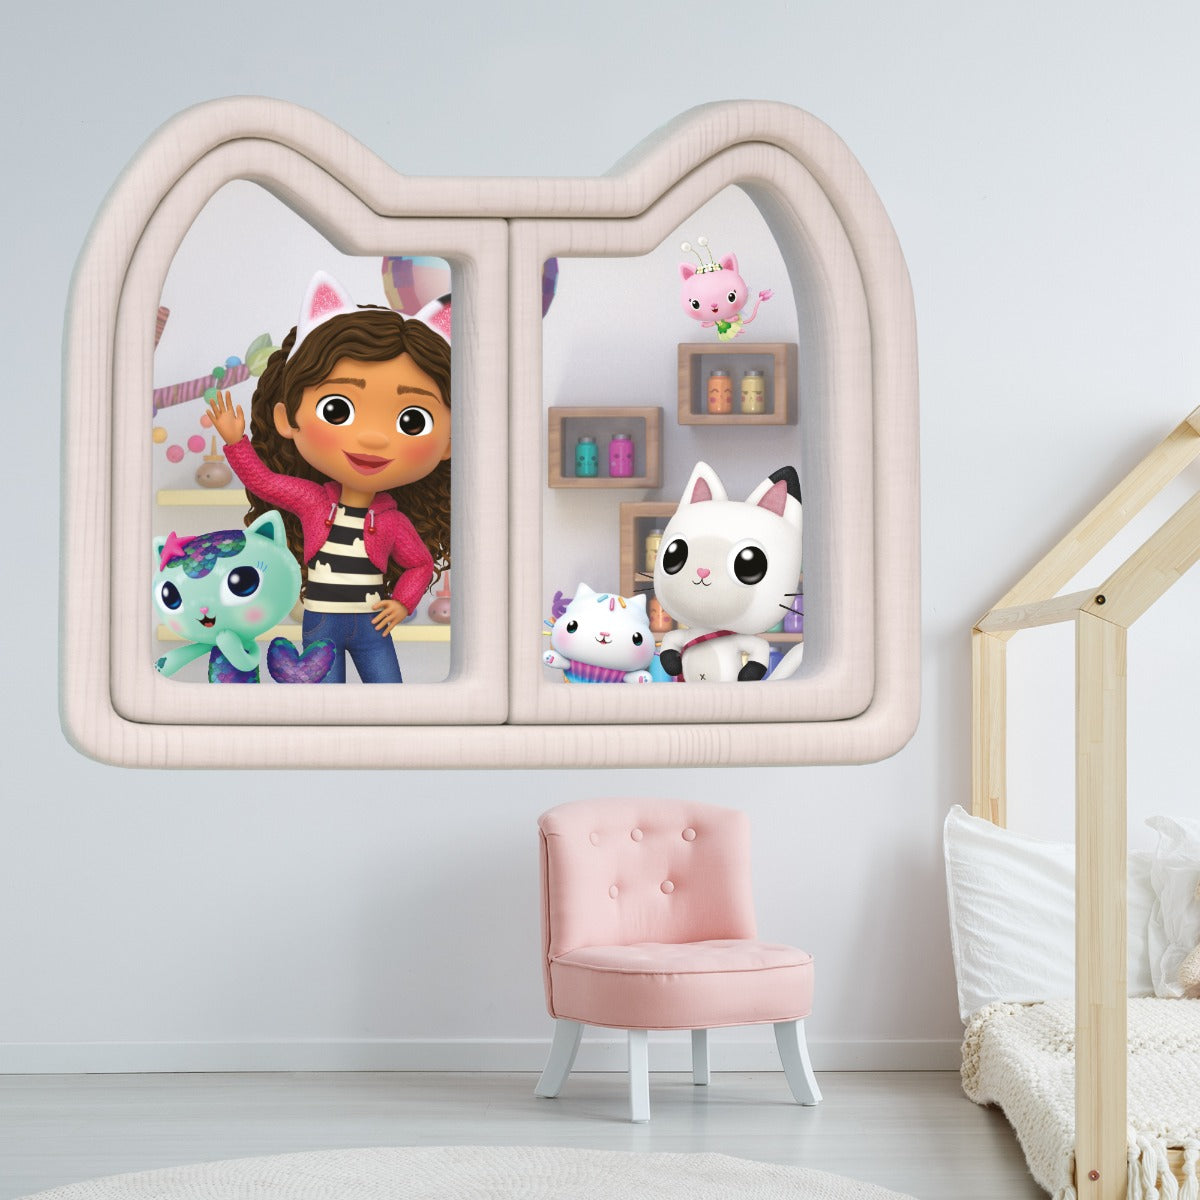 Gabby's Dollhouse Wall Sticker - Gabby and Friends Waving Through Window